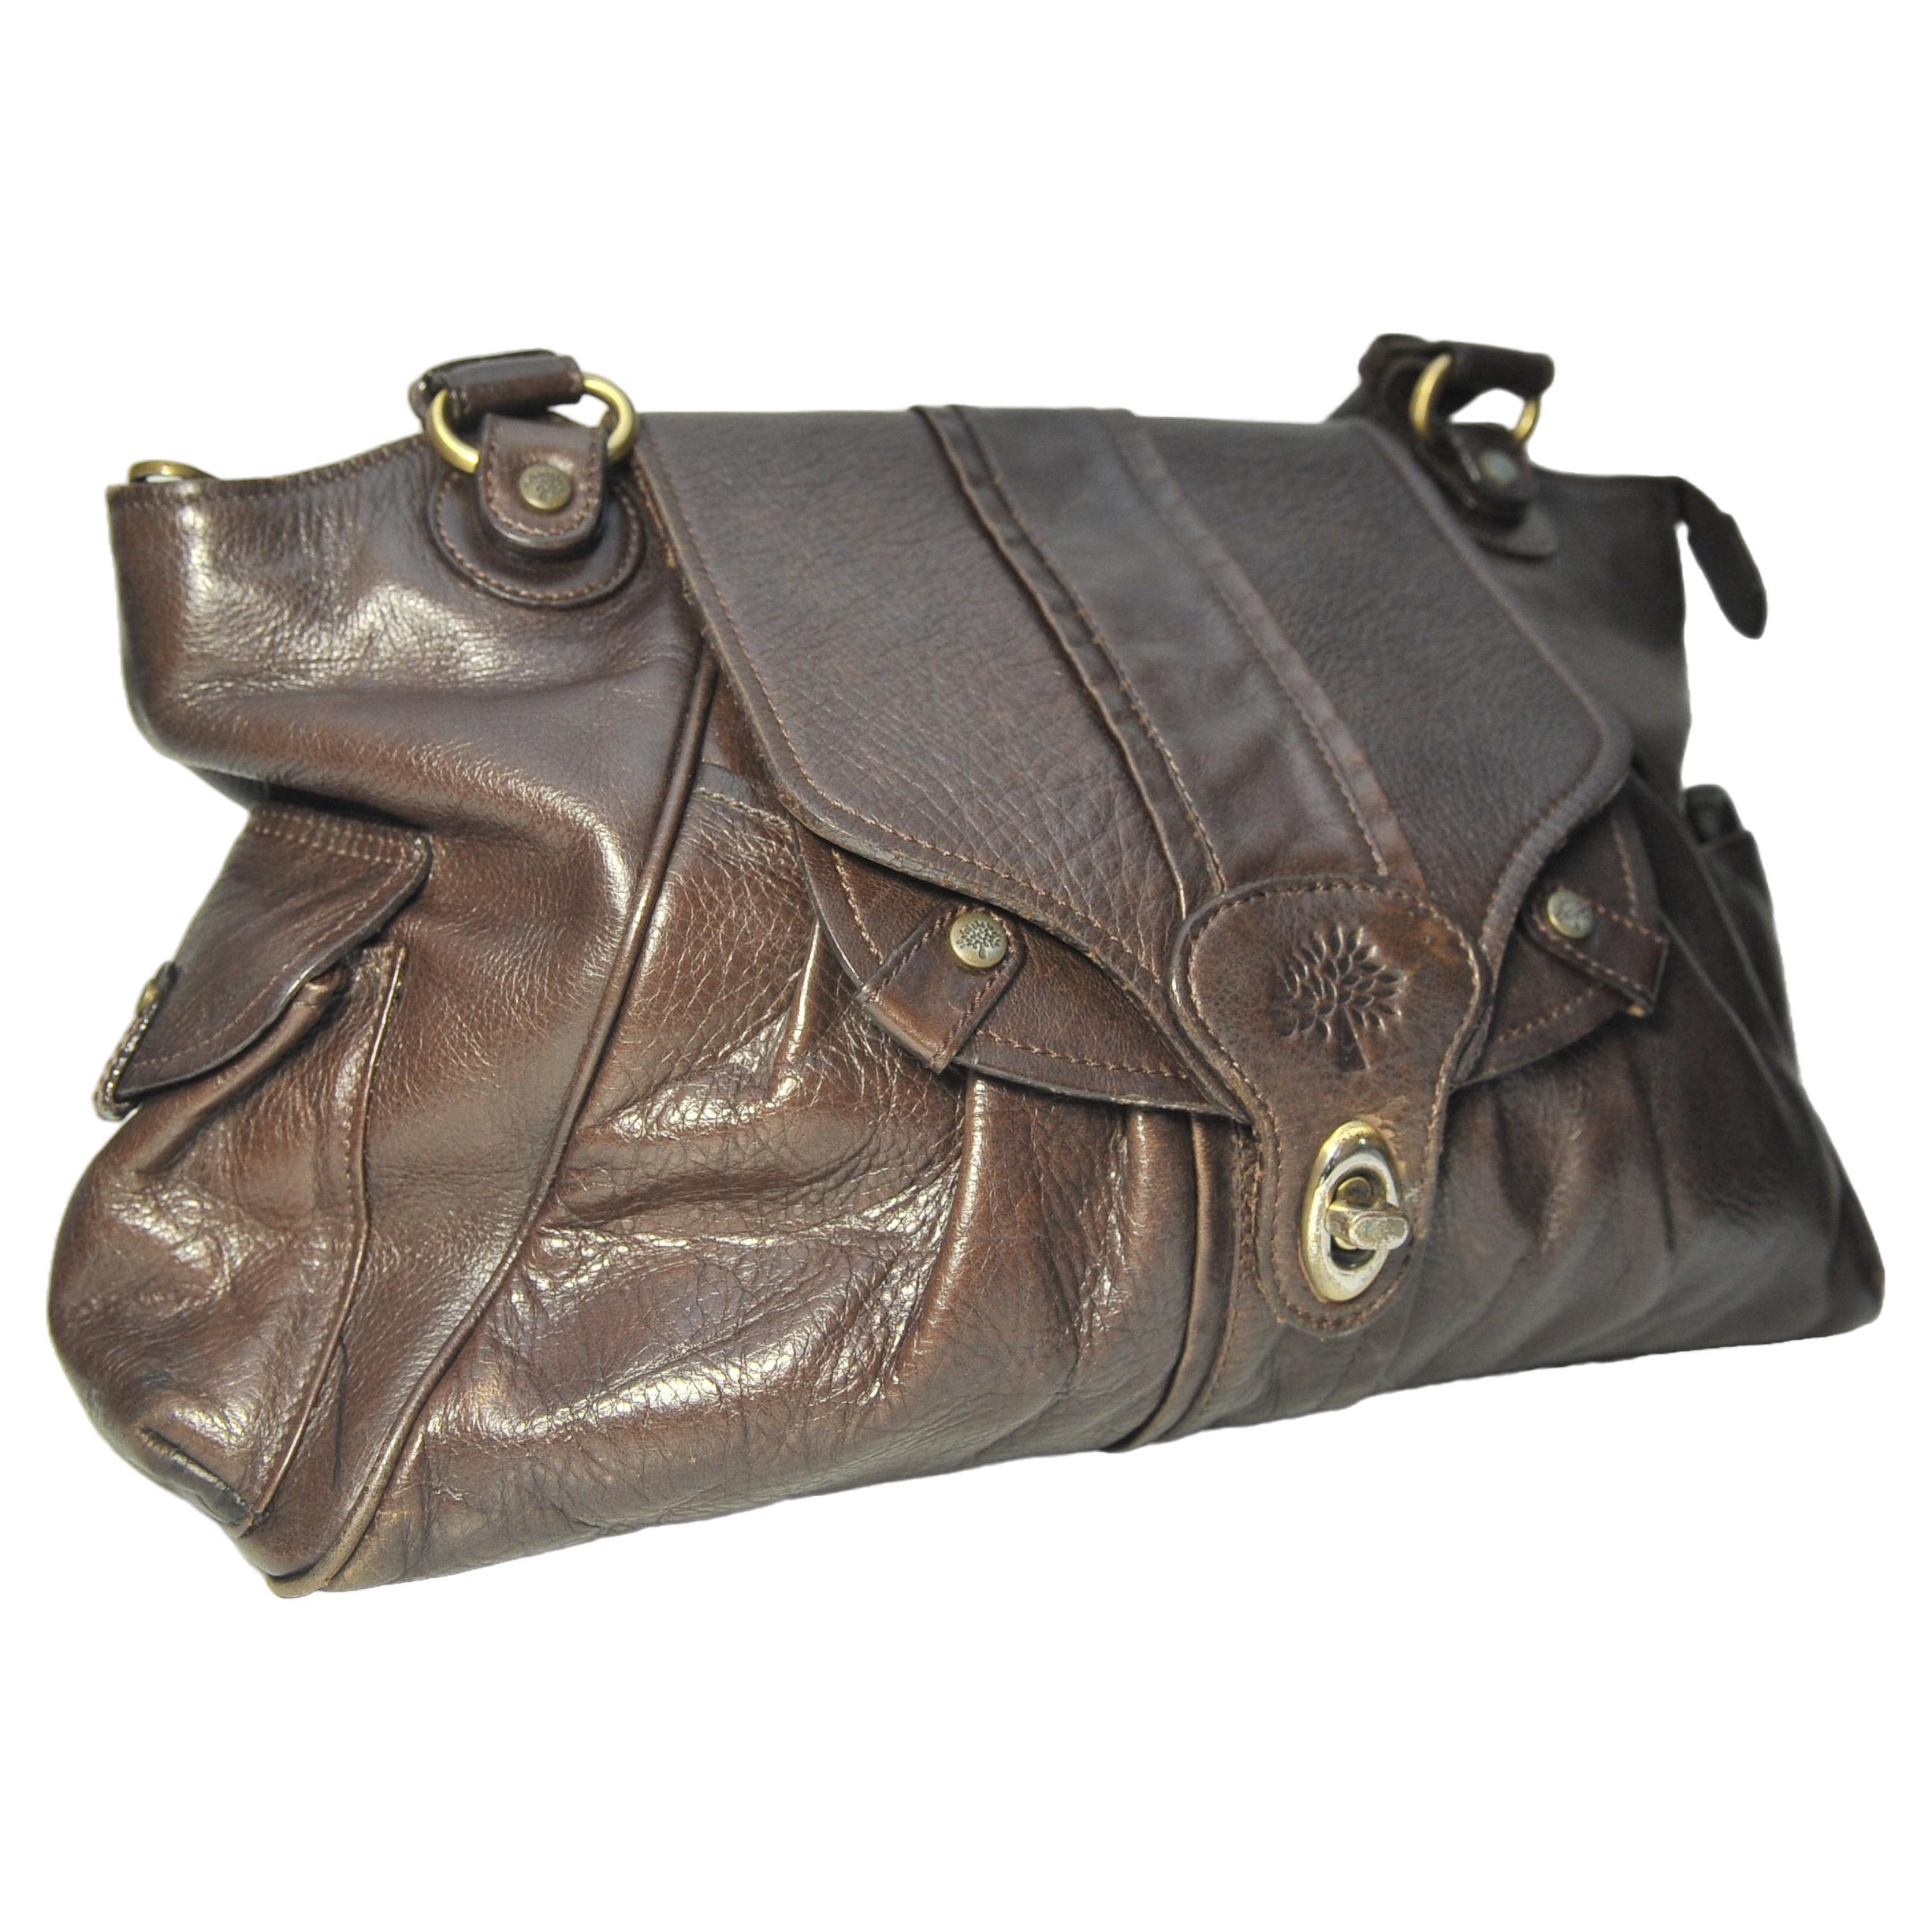 Mulberry Brown Leather Ladies Handbag With Large Loop Handles.

Complete With Original Maroon Mulberry Dust Bag